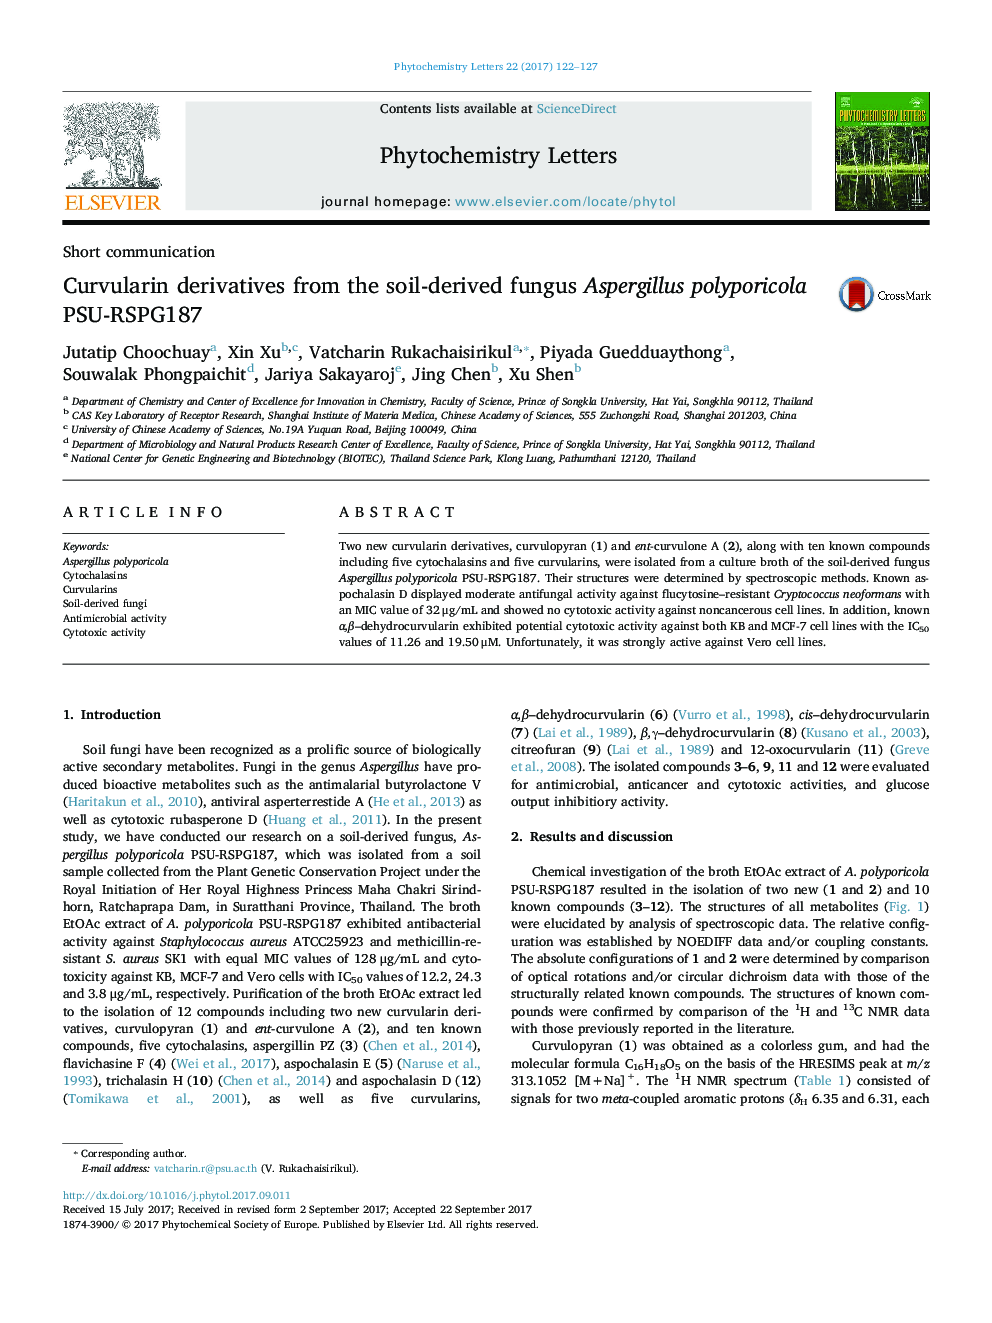 Curvularin derivatives from the soil-derived fungus Aspergillus polyporicola PSU-RSPG187